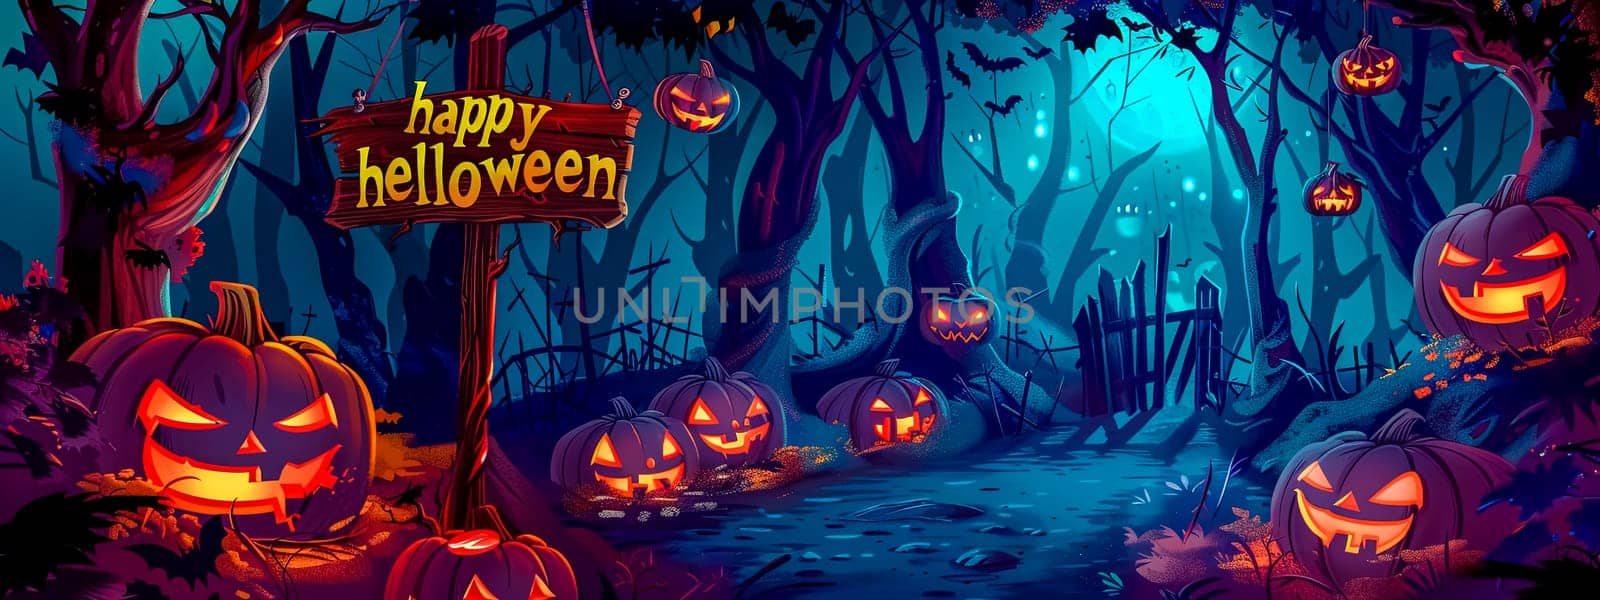 Enchanted halloween night forest scene with jack-o'-lanterns by Edophoto